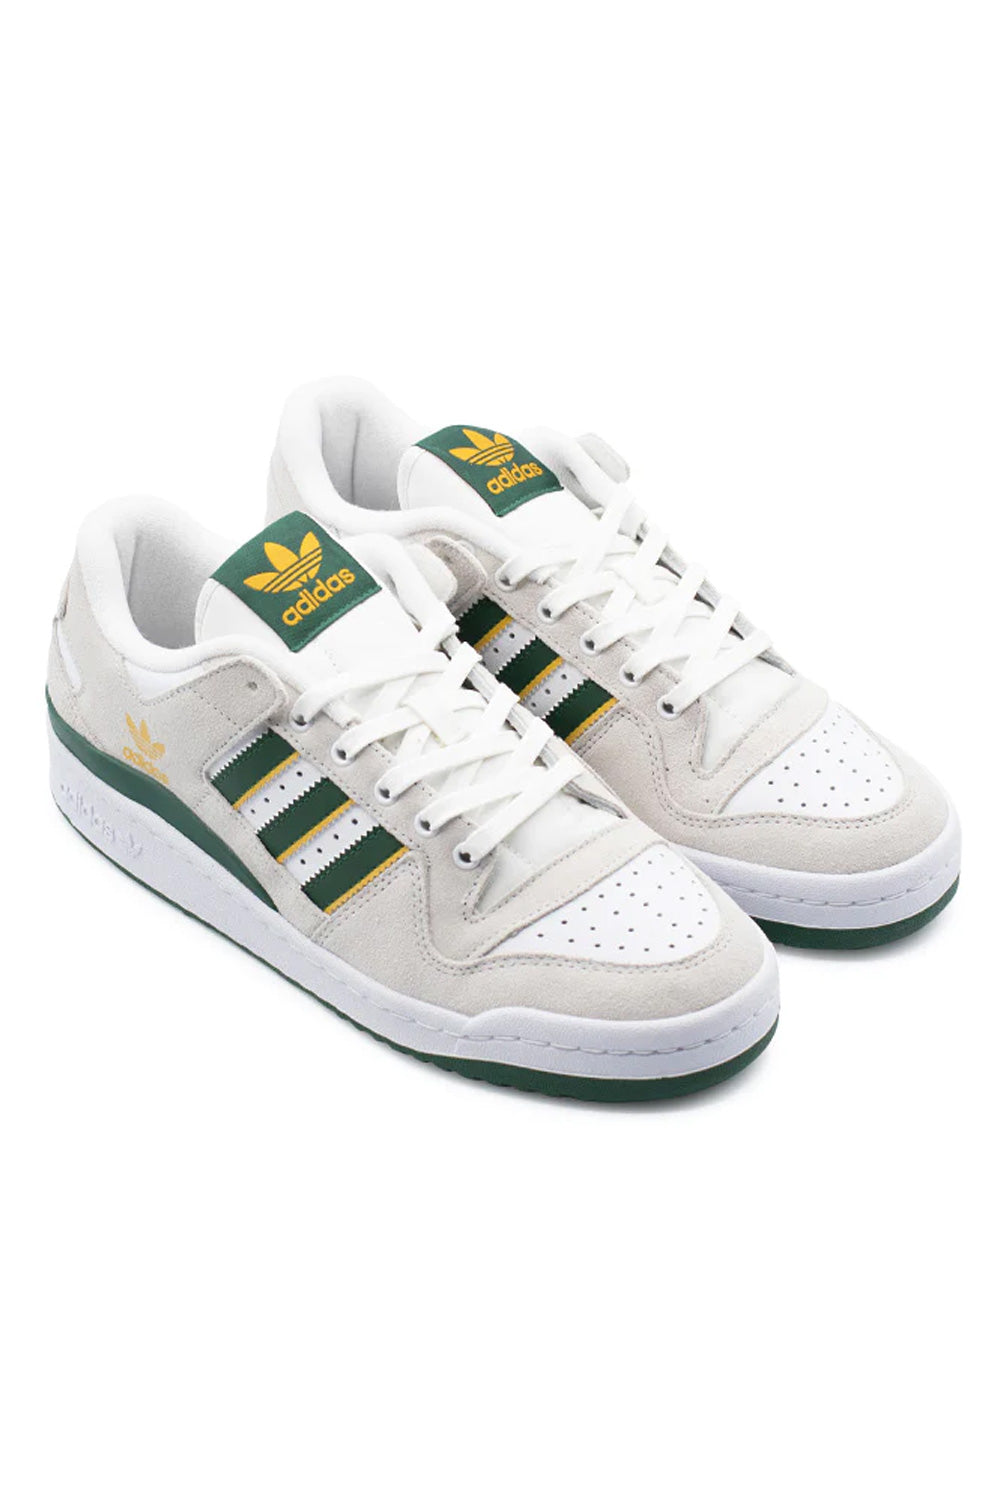 Adidas Forum 84 Low ADV Shoe Crystal White / Dark Green / Preloved Yellow - BONKERS